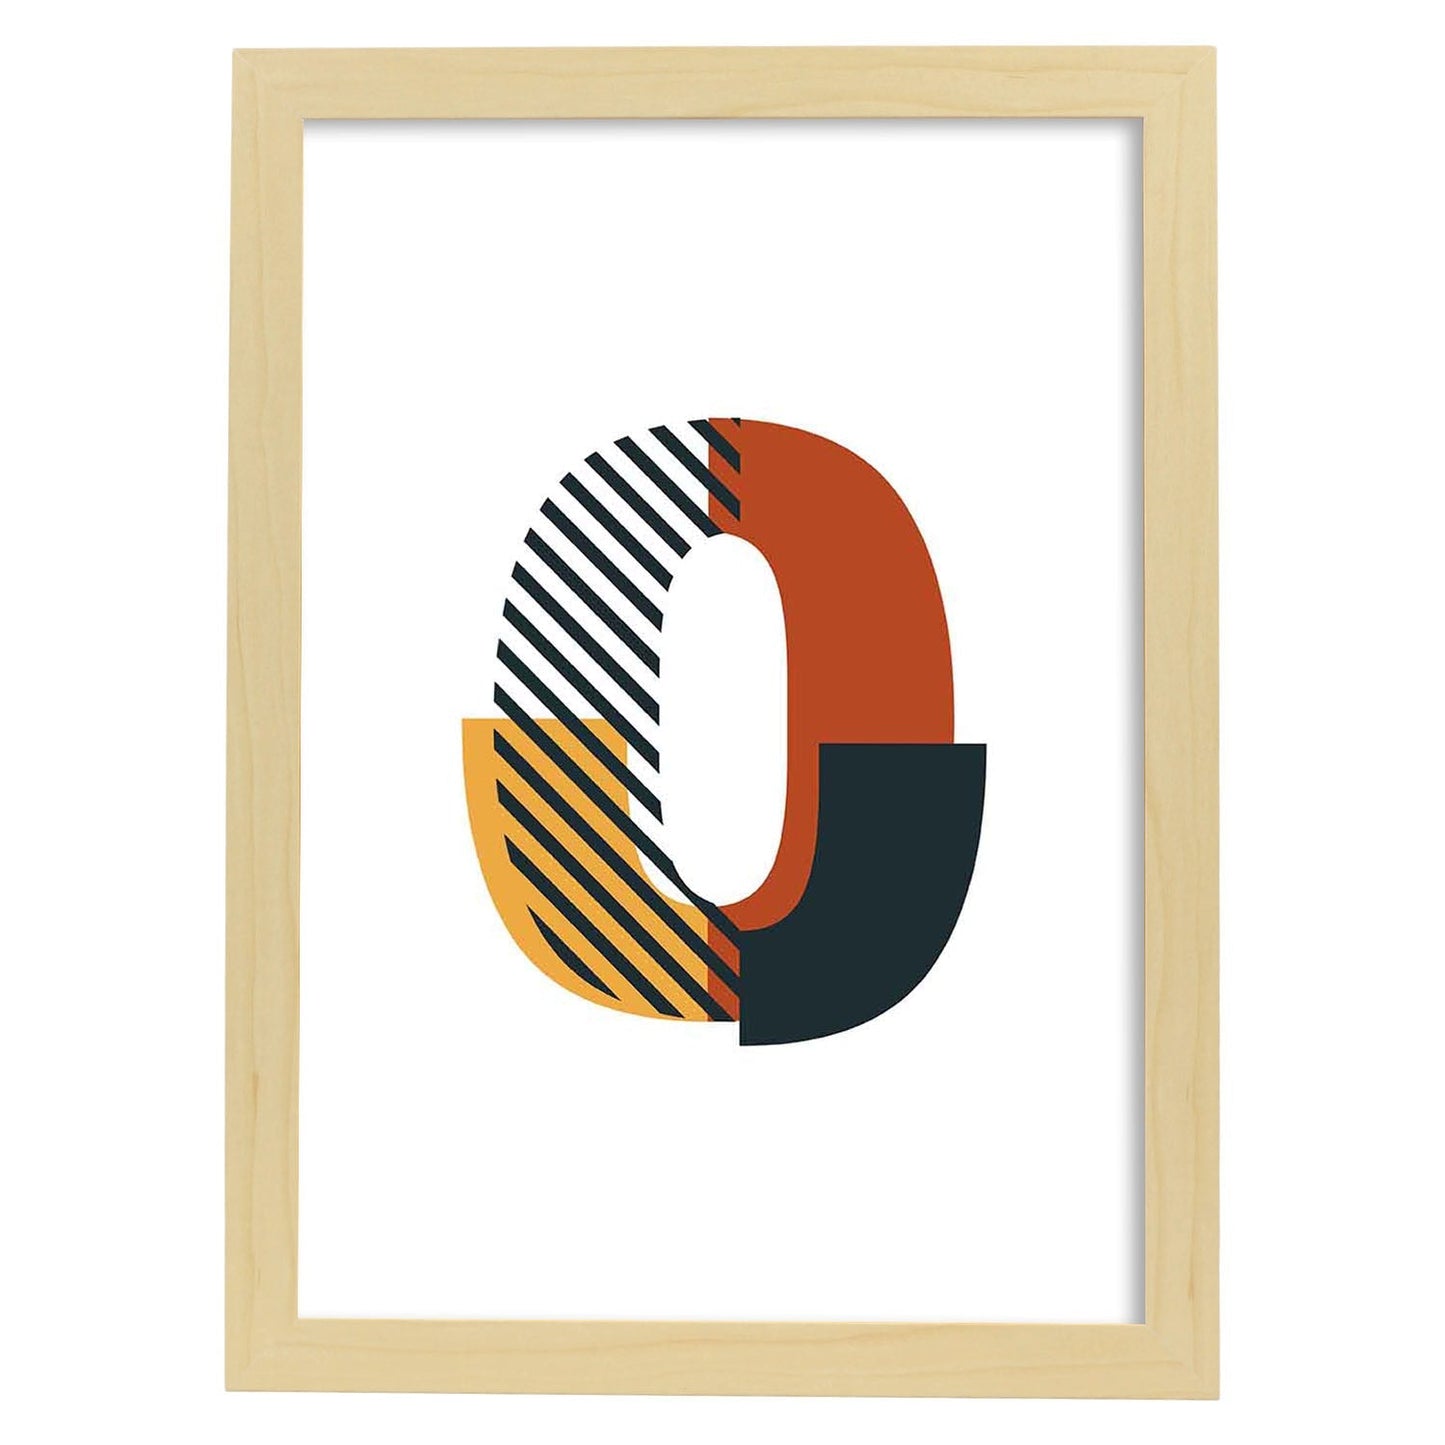 Poster de número 0. Lámina estilo Geometria con imágenes del alfabeto.-Artwork-Nacnic-A3-Marco Madera clara-Nacnic Estudio SL